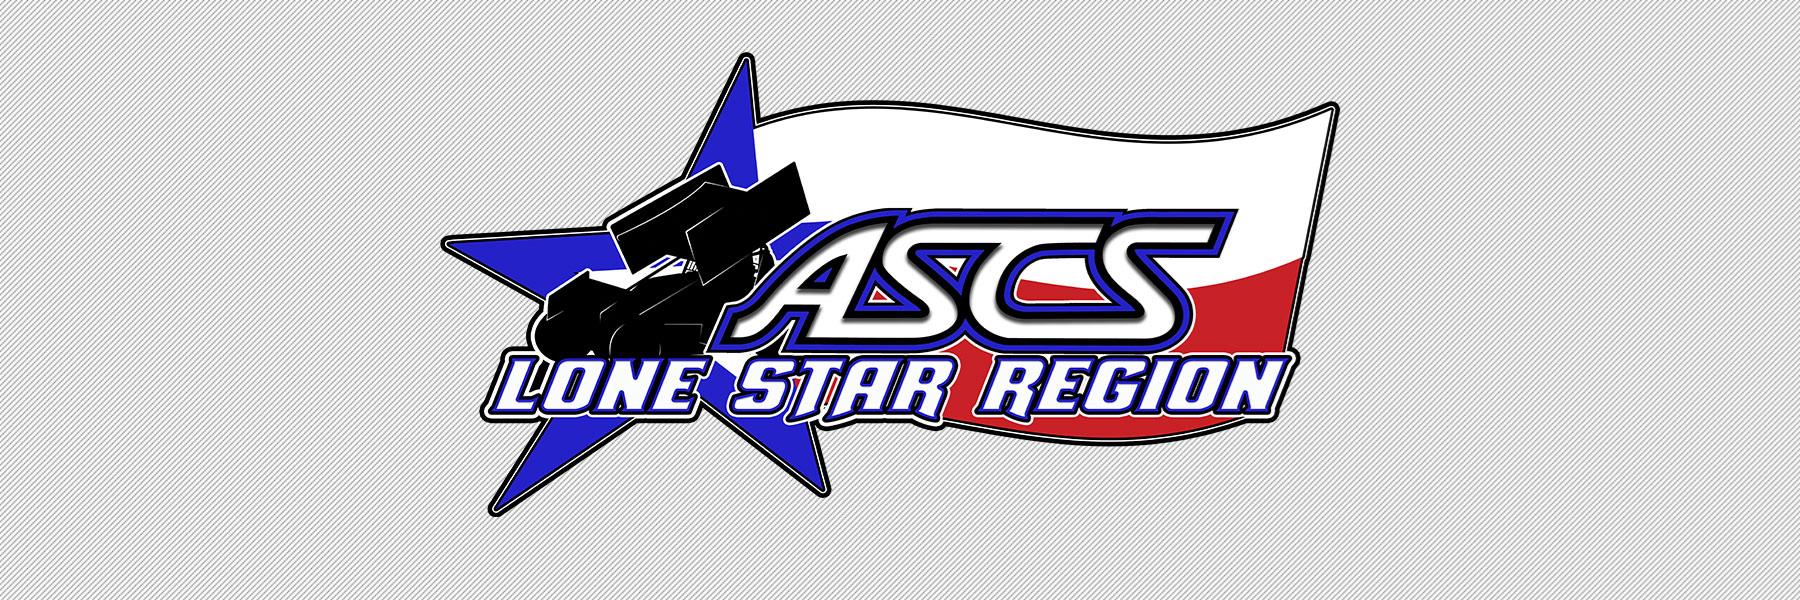 ASCS Lone Star Region